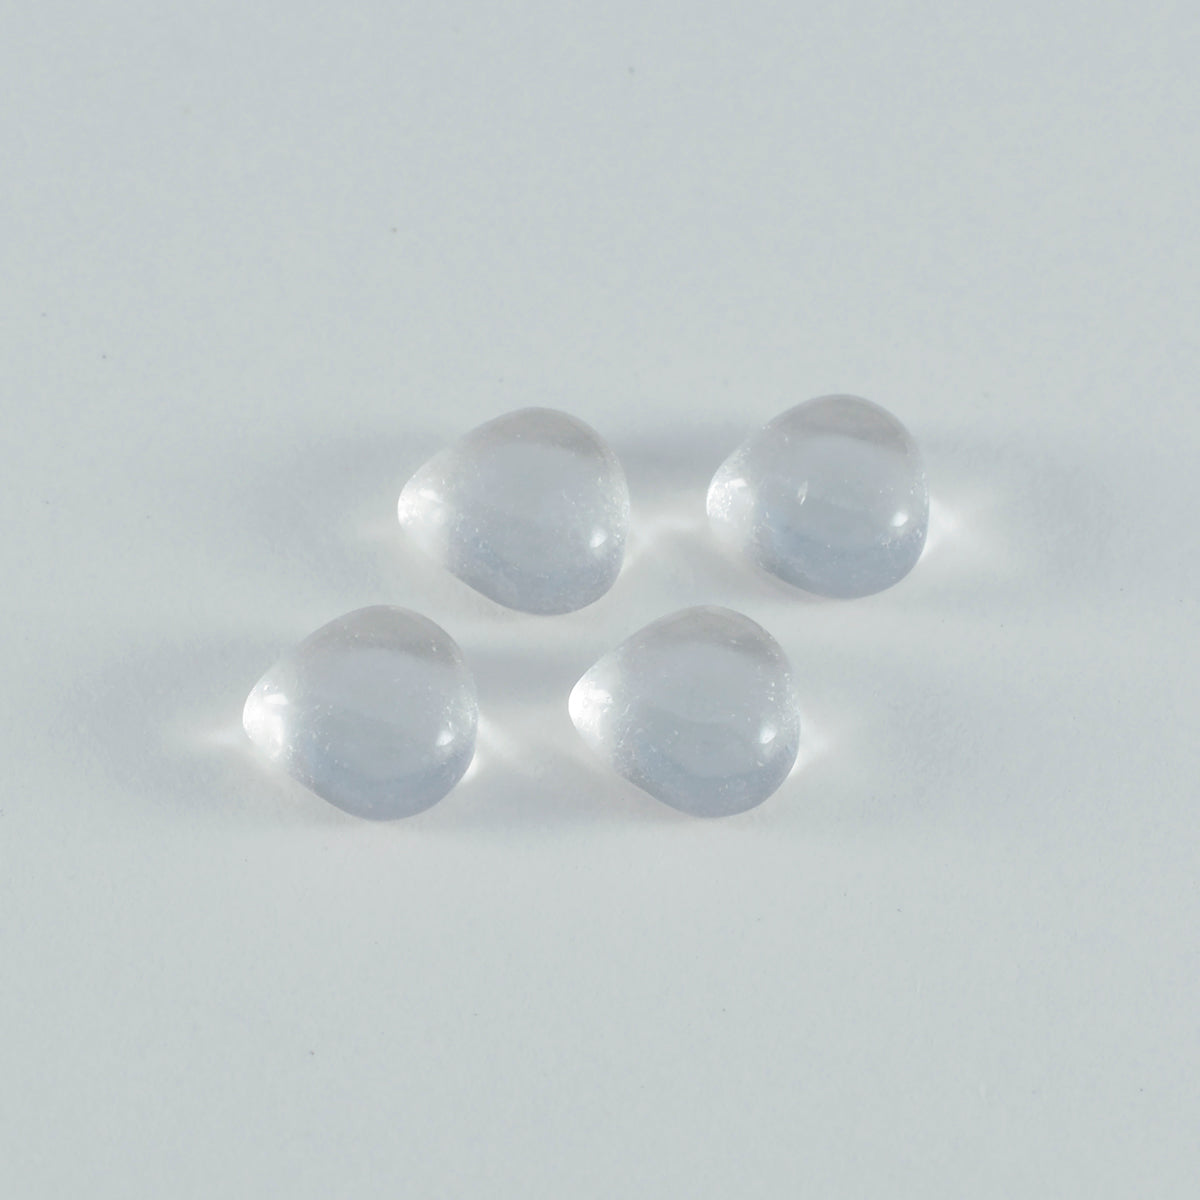 riyogems 1шт белый кристалл кварц кабошон 13x13 мм в форме сердца A+ качественный камень